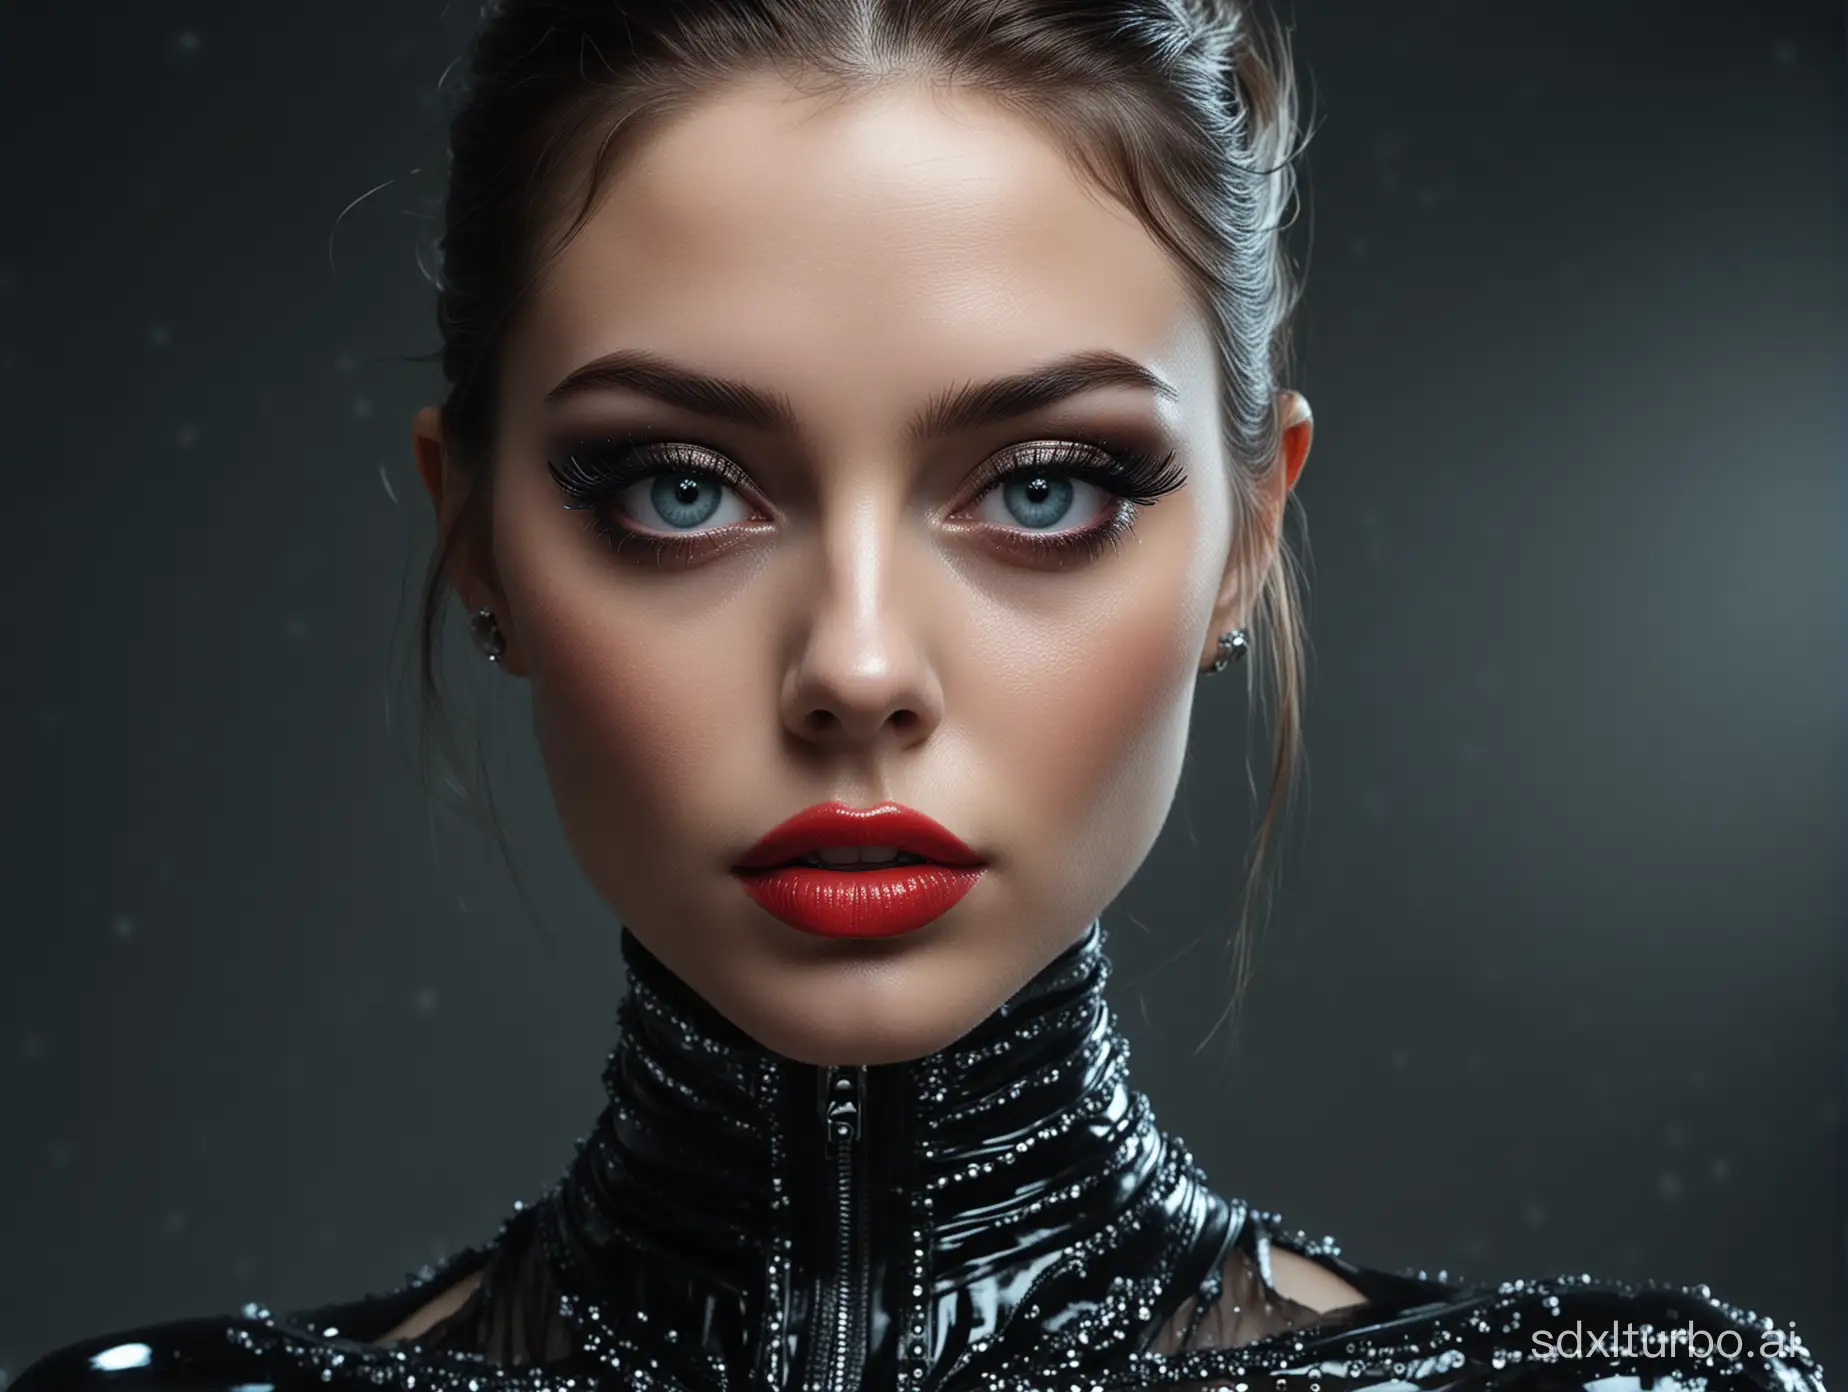 Extravagant-Female-Model-in-HR-Giger-Futuristic-Black-Leather-Dress-Avantgarde-Fashion-Portrait